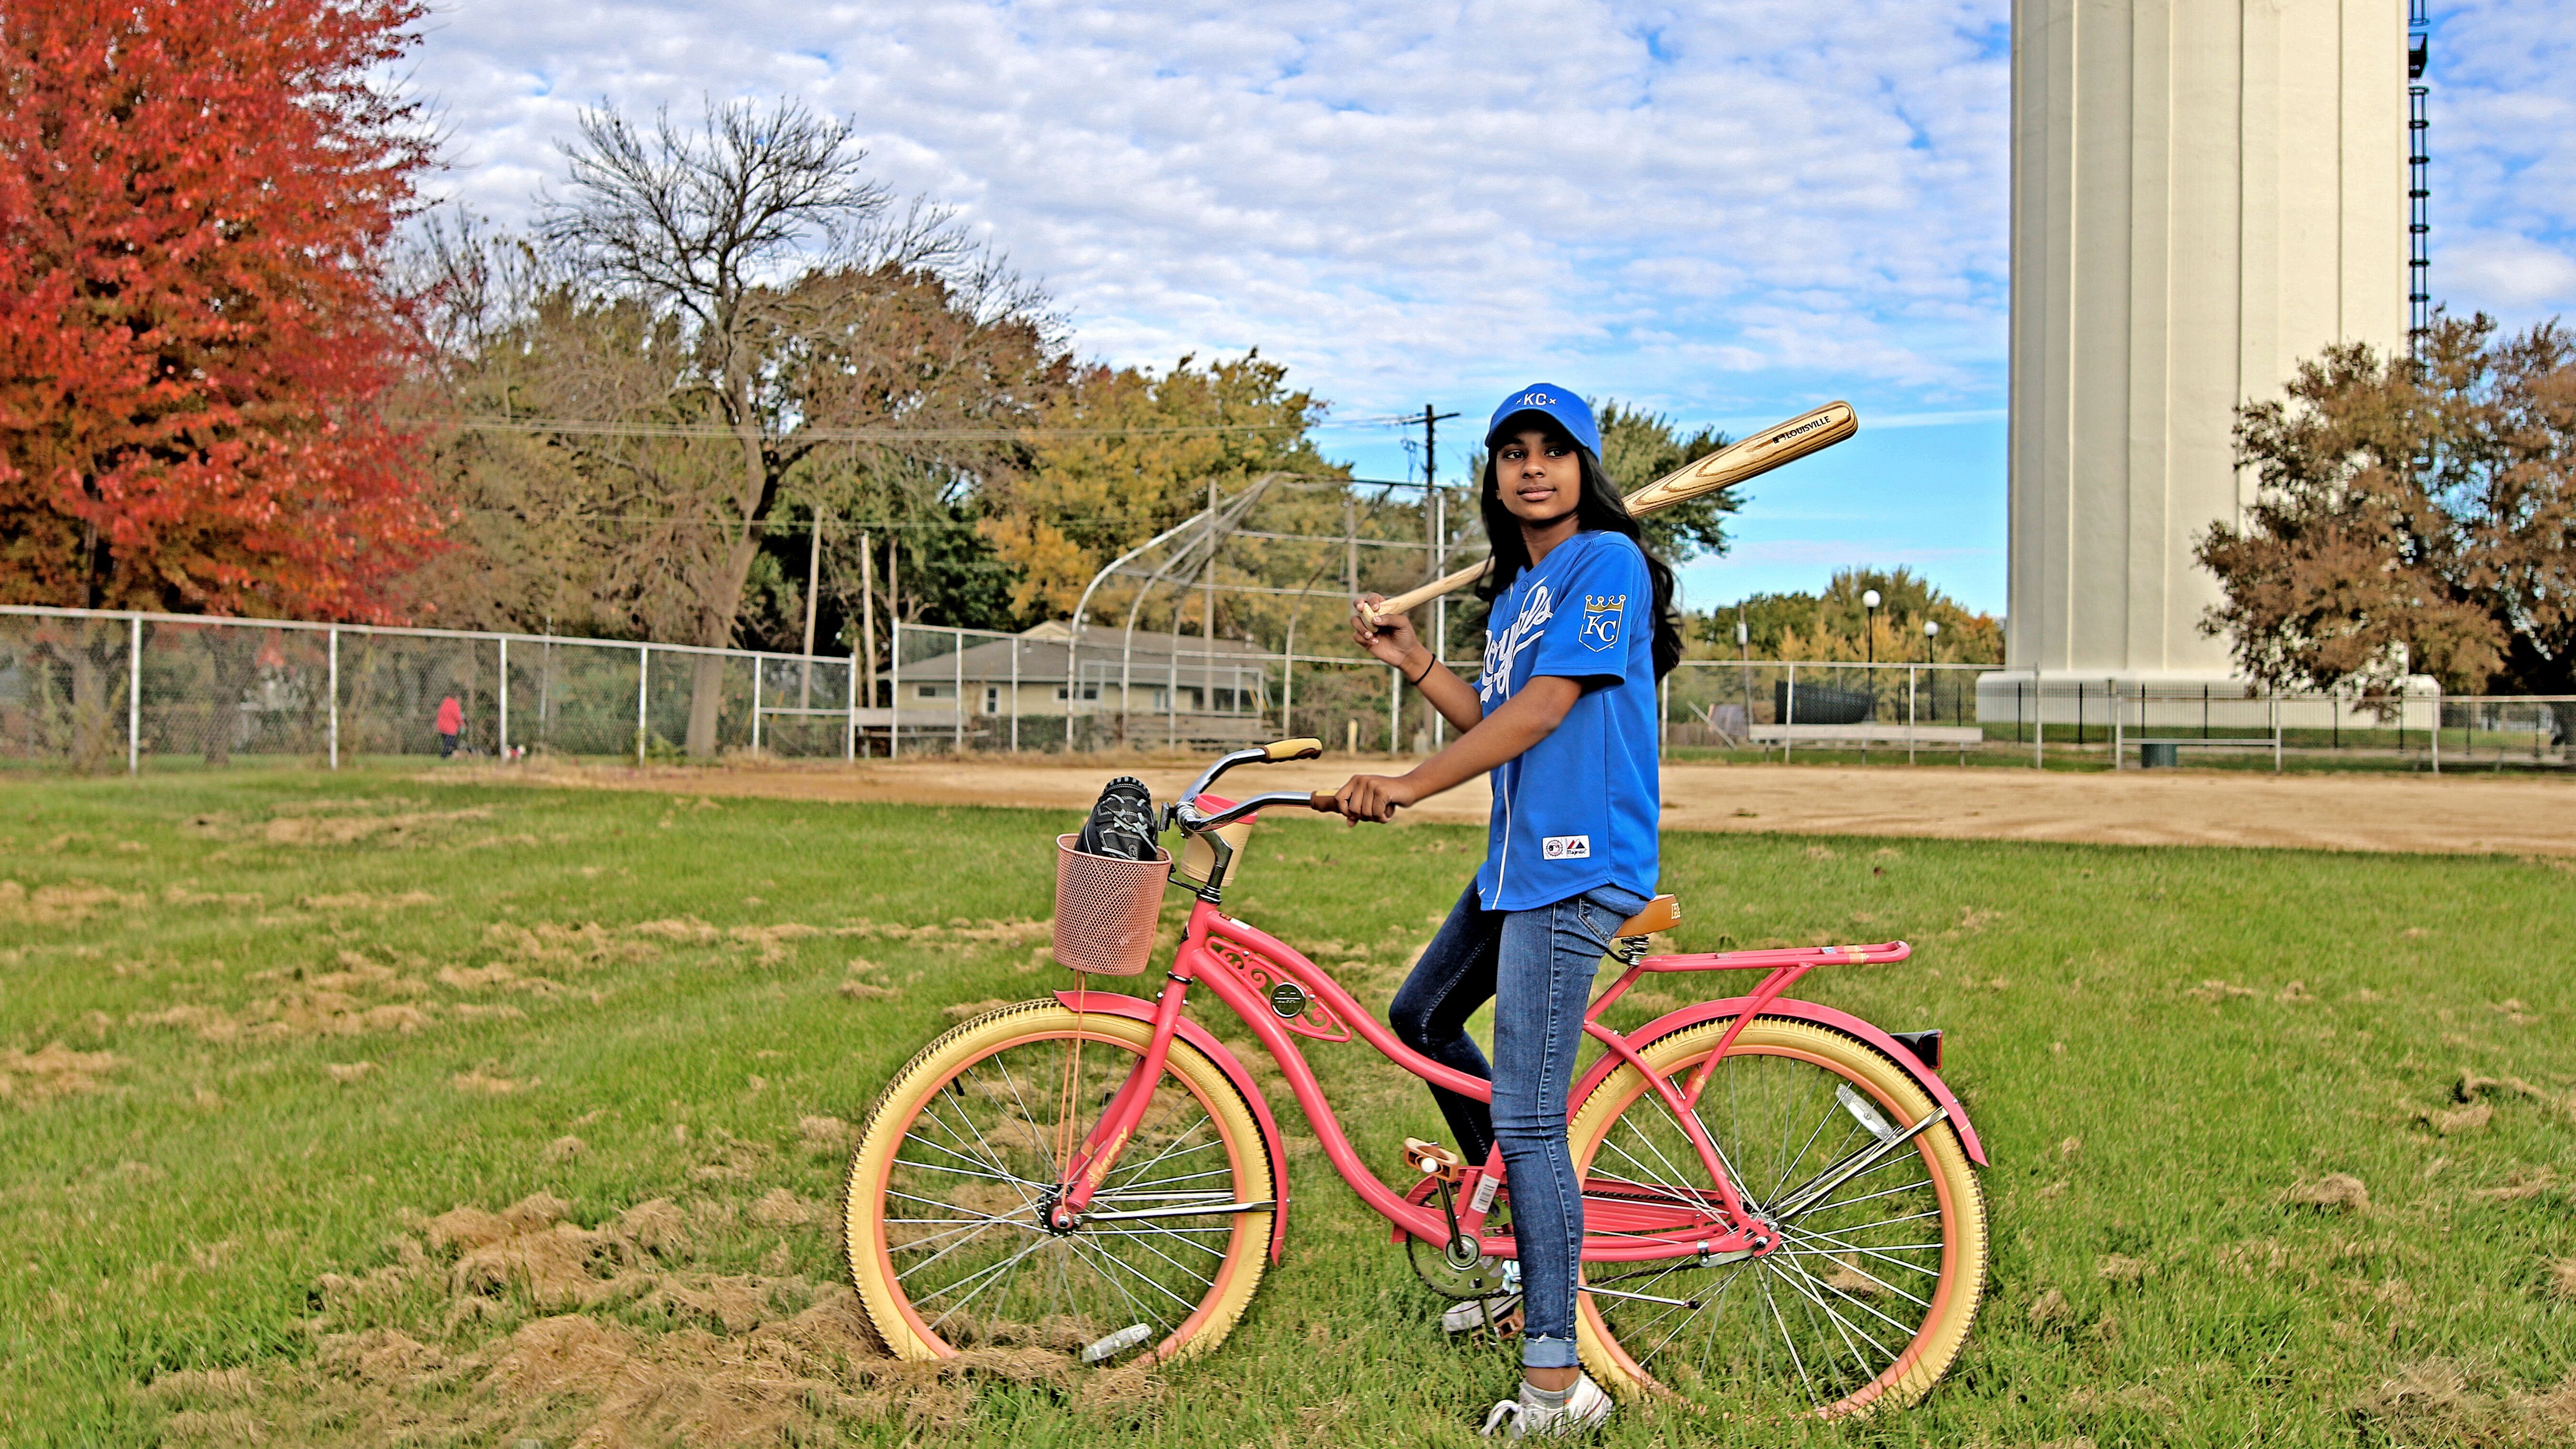 Girl posing with a baseball bat and a bike